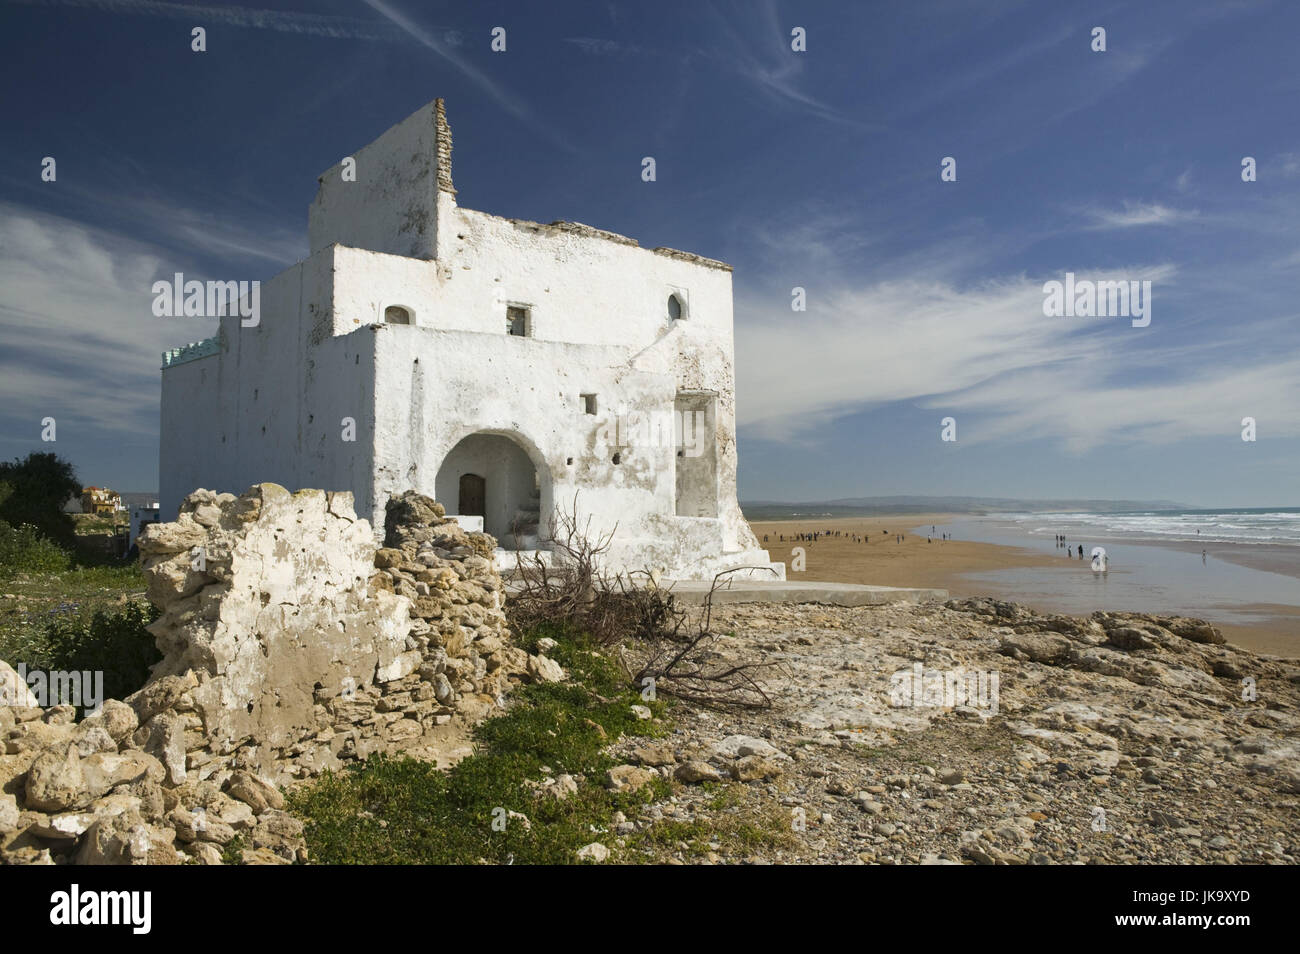 Marokko, Atlantikküste, Strand, 'Sidi Kaouki', Marabout, Schrein, alt, verfallen, Stock Photo